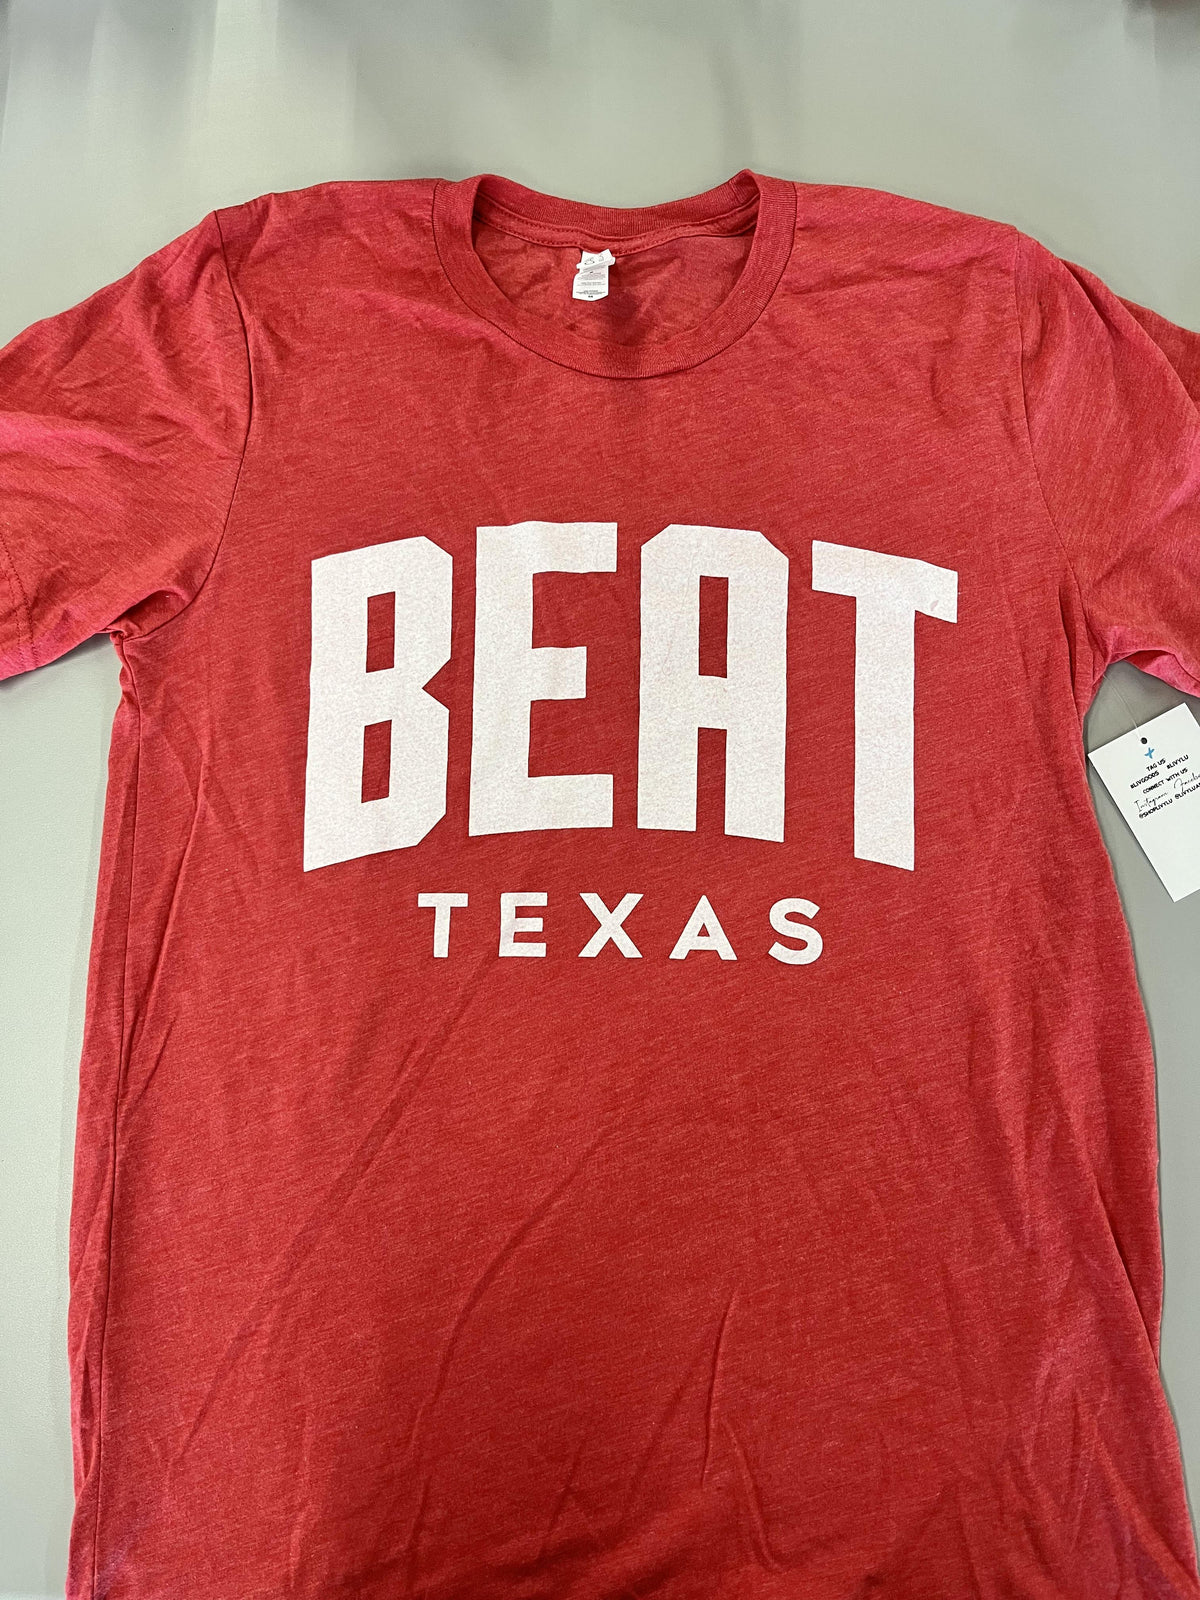 Beat Texas Gault Red Tee